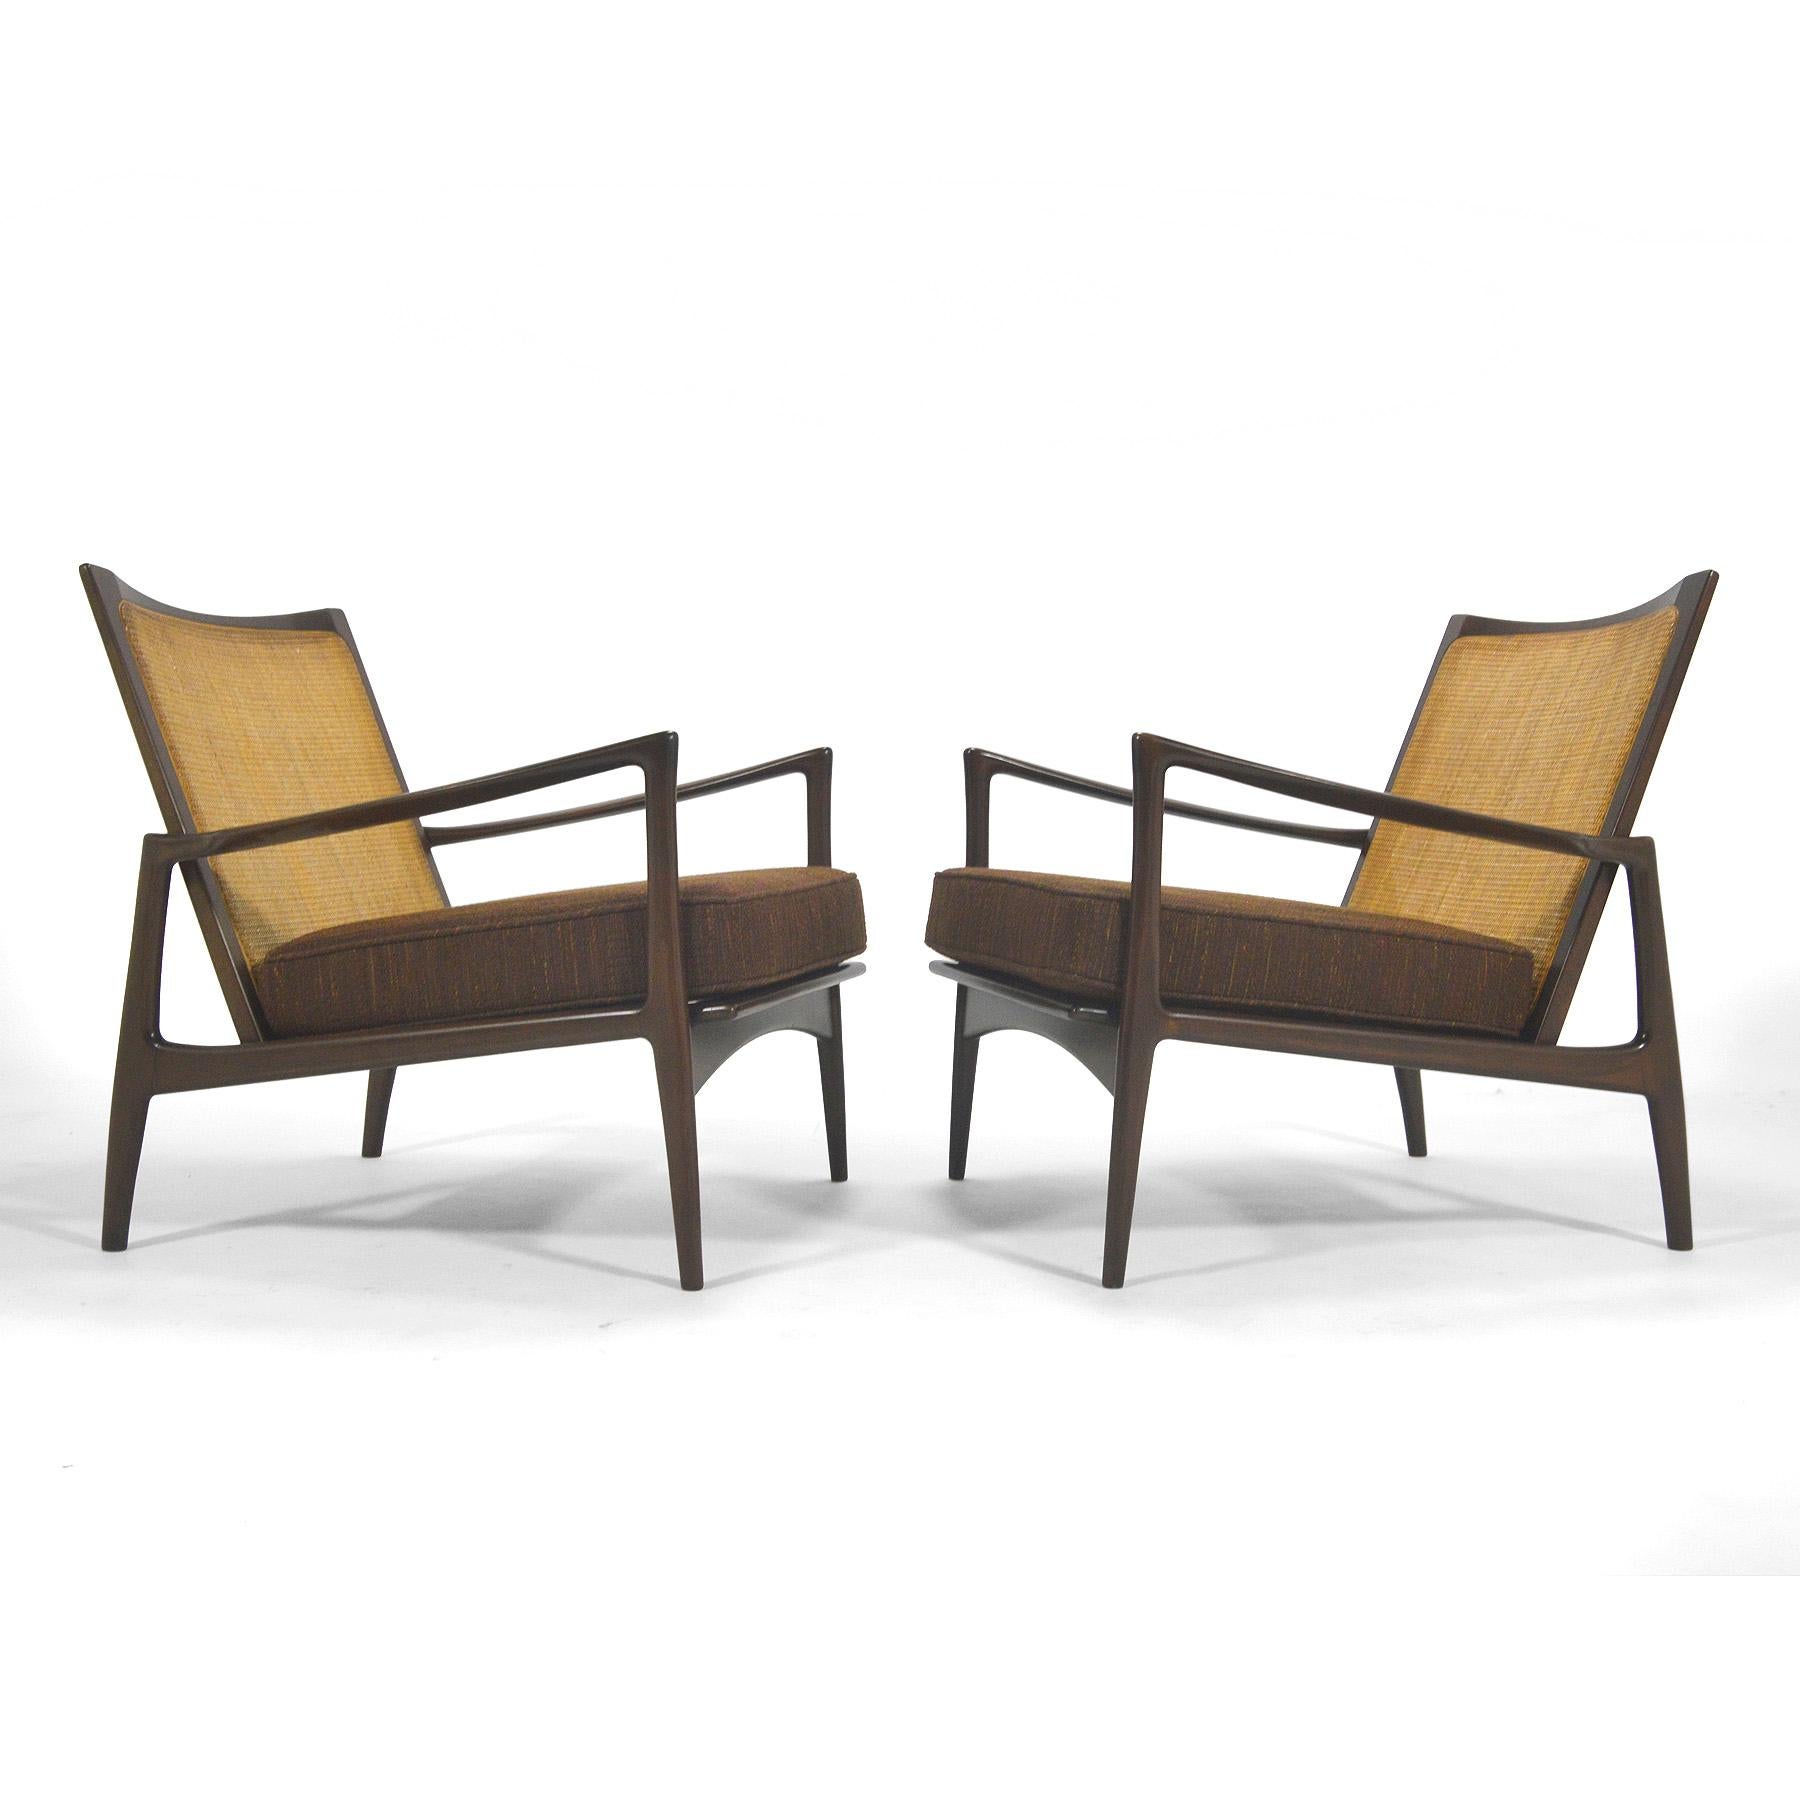 Danish Ib Kofod-Larsen Cane-Back Lounge Chair Pair For Sale